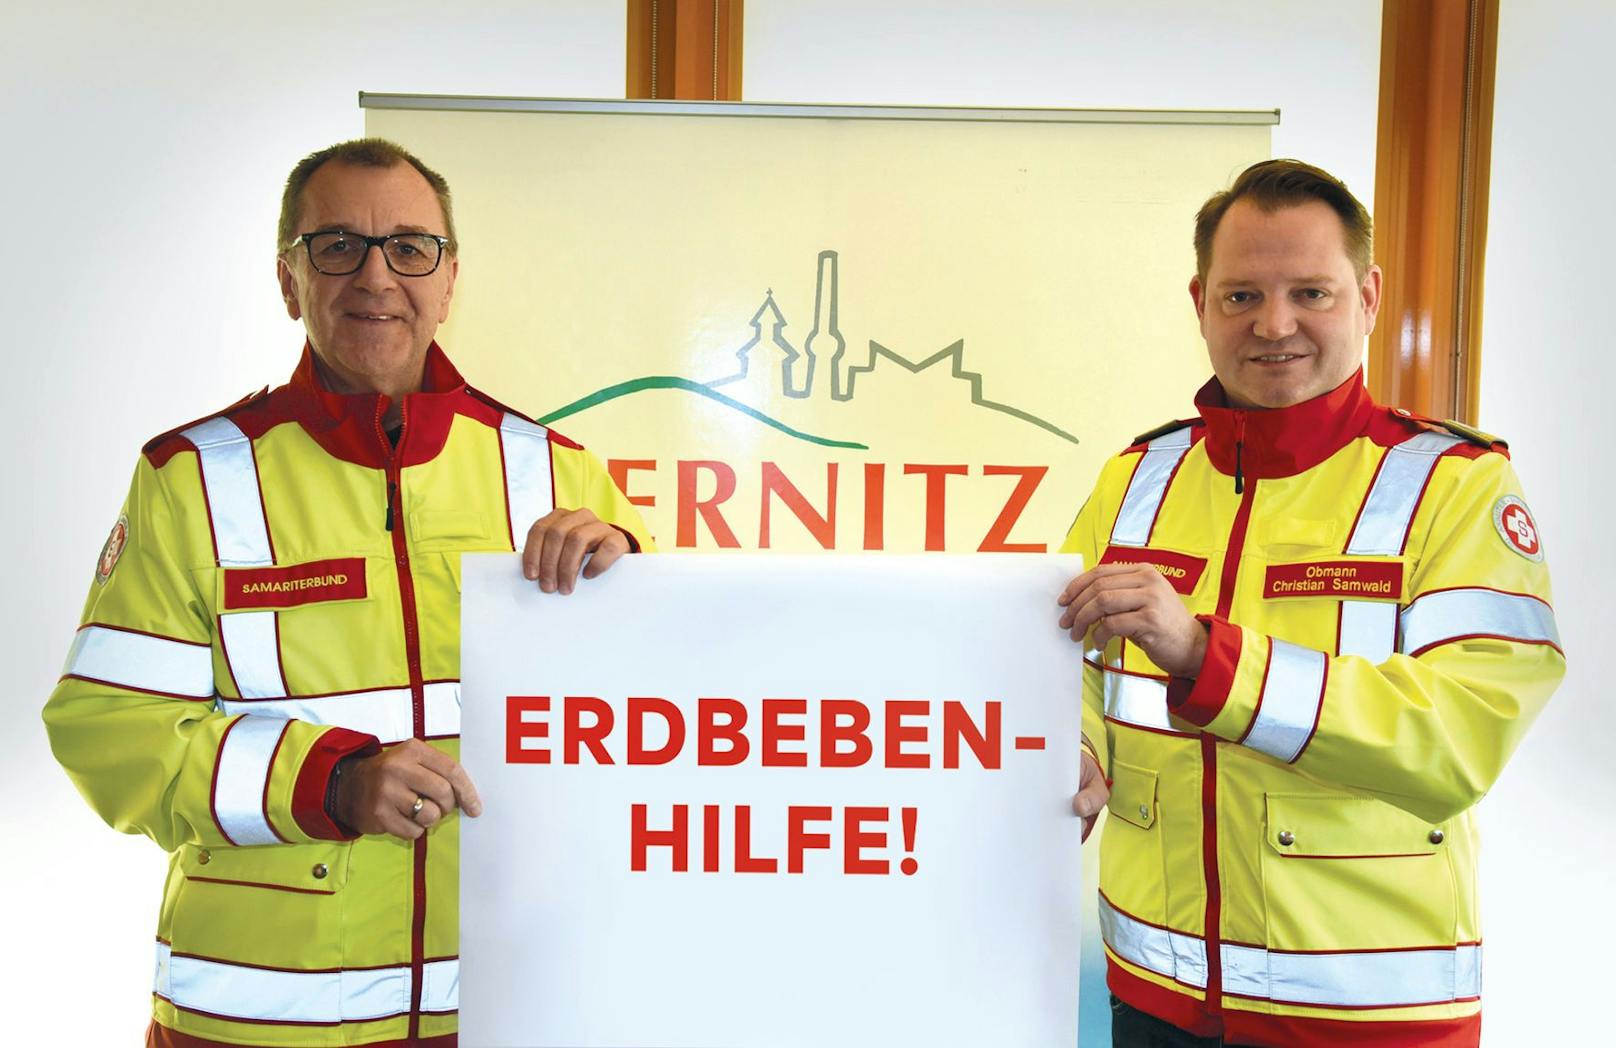 Erdbebenkatastrophe: Ternitz hilft, freuen sich Bürgermeister Rupert Dworak (l.) und Christian Samwald